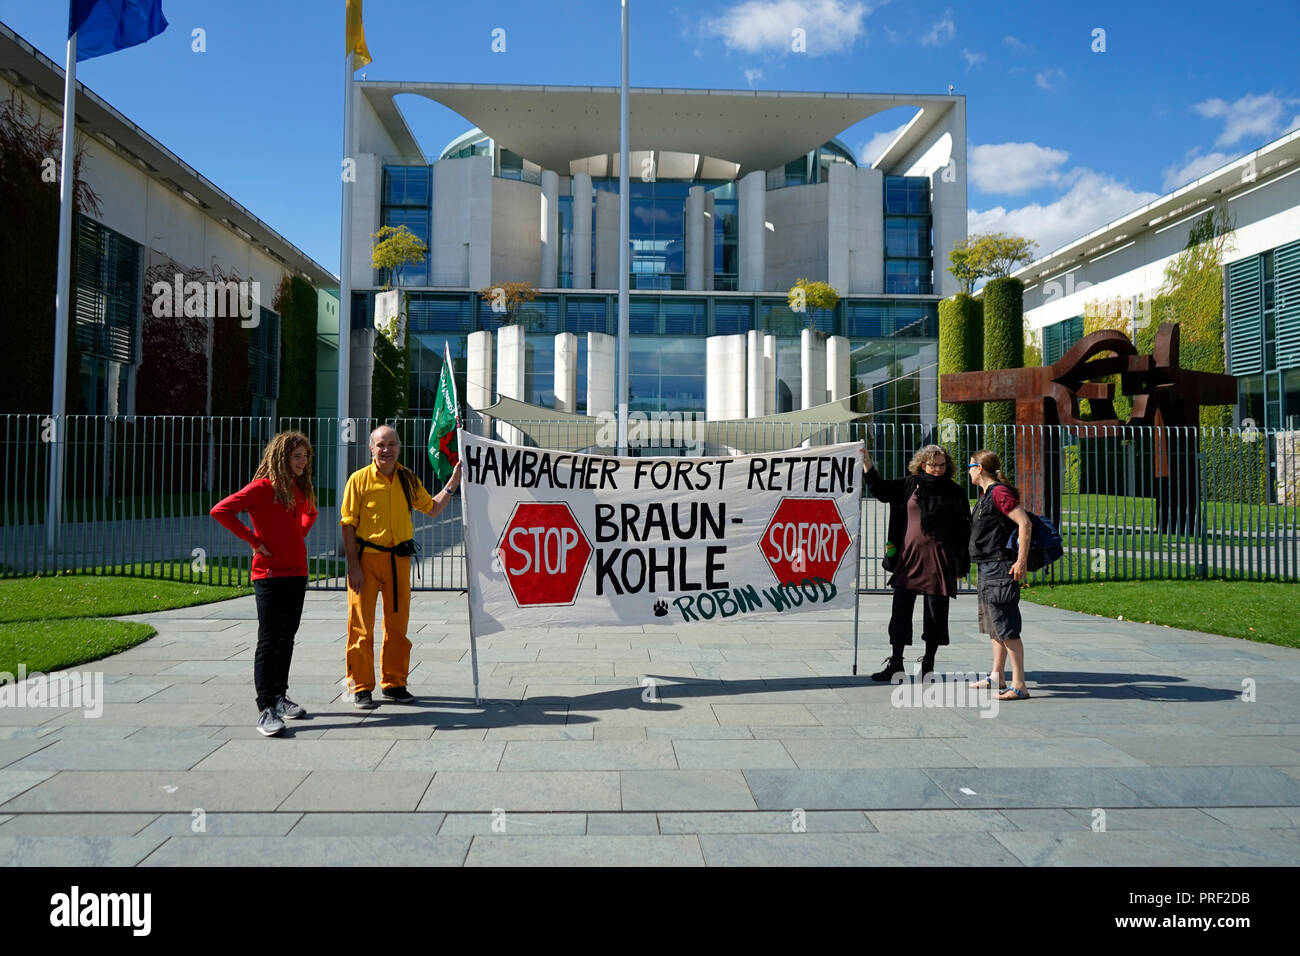 "Hambacher Forst retten! Braunkohle sofort stoppen. Robin Wood'-Protestplakat bei Demonstration gegen die Abholzung des Hambacher Forsts zum Kohleabbau Stockfoto